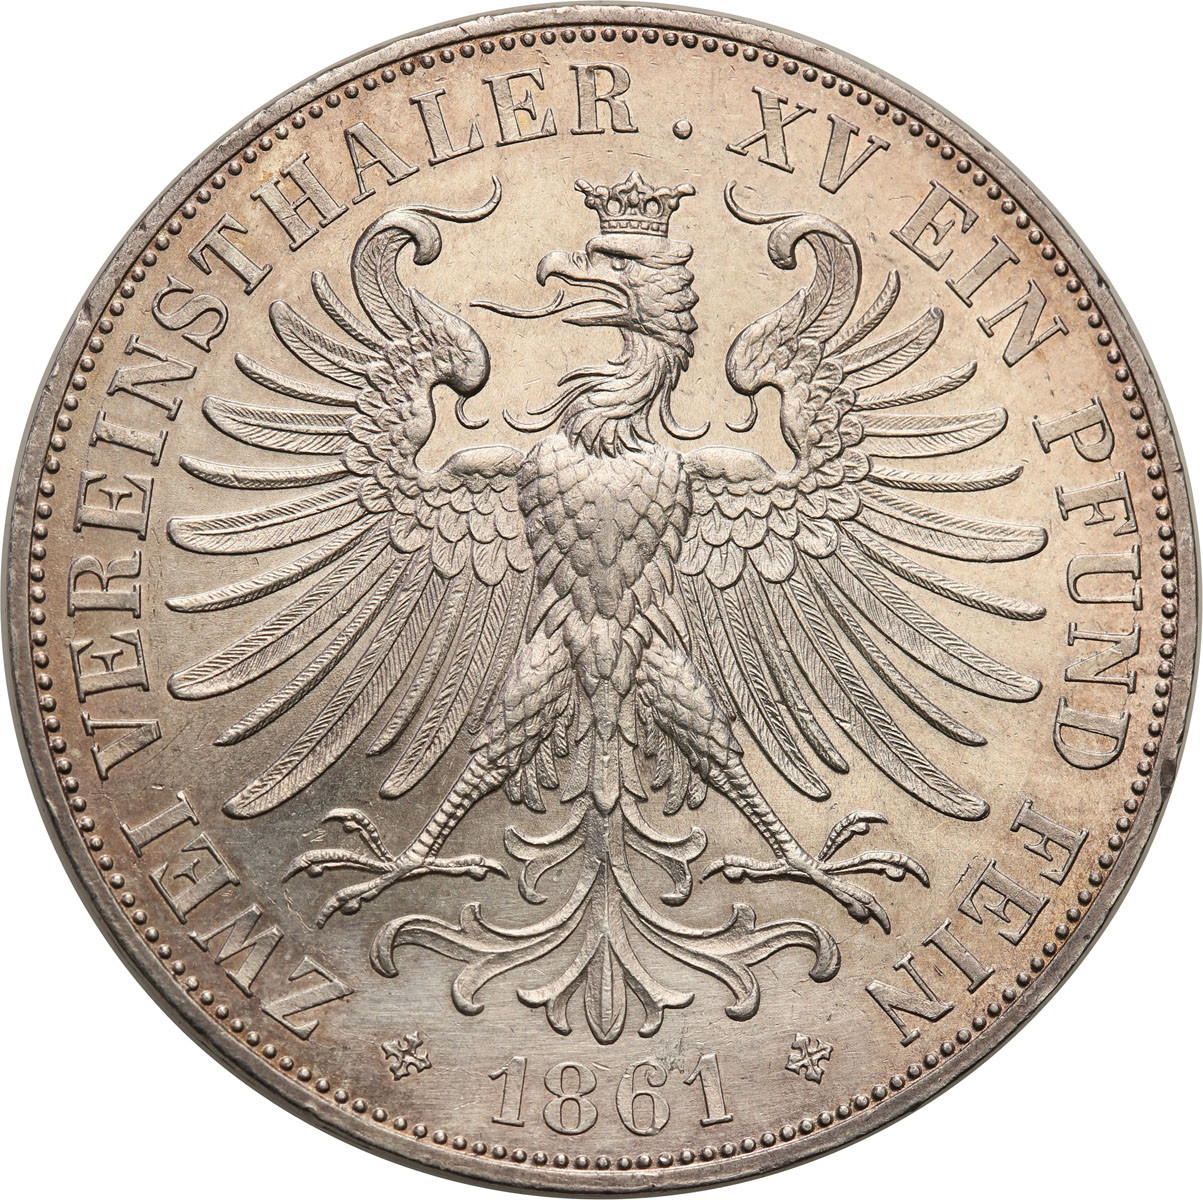 Niemcy, Frankfurt. Dwutalar (2 talary) 1861, Frankfurt - PIĘKNY